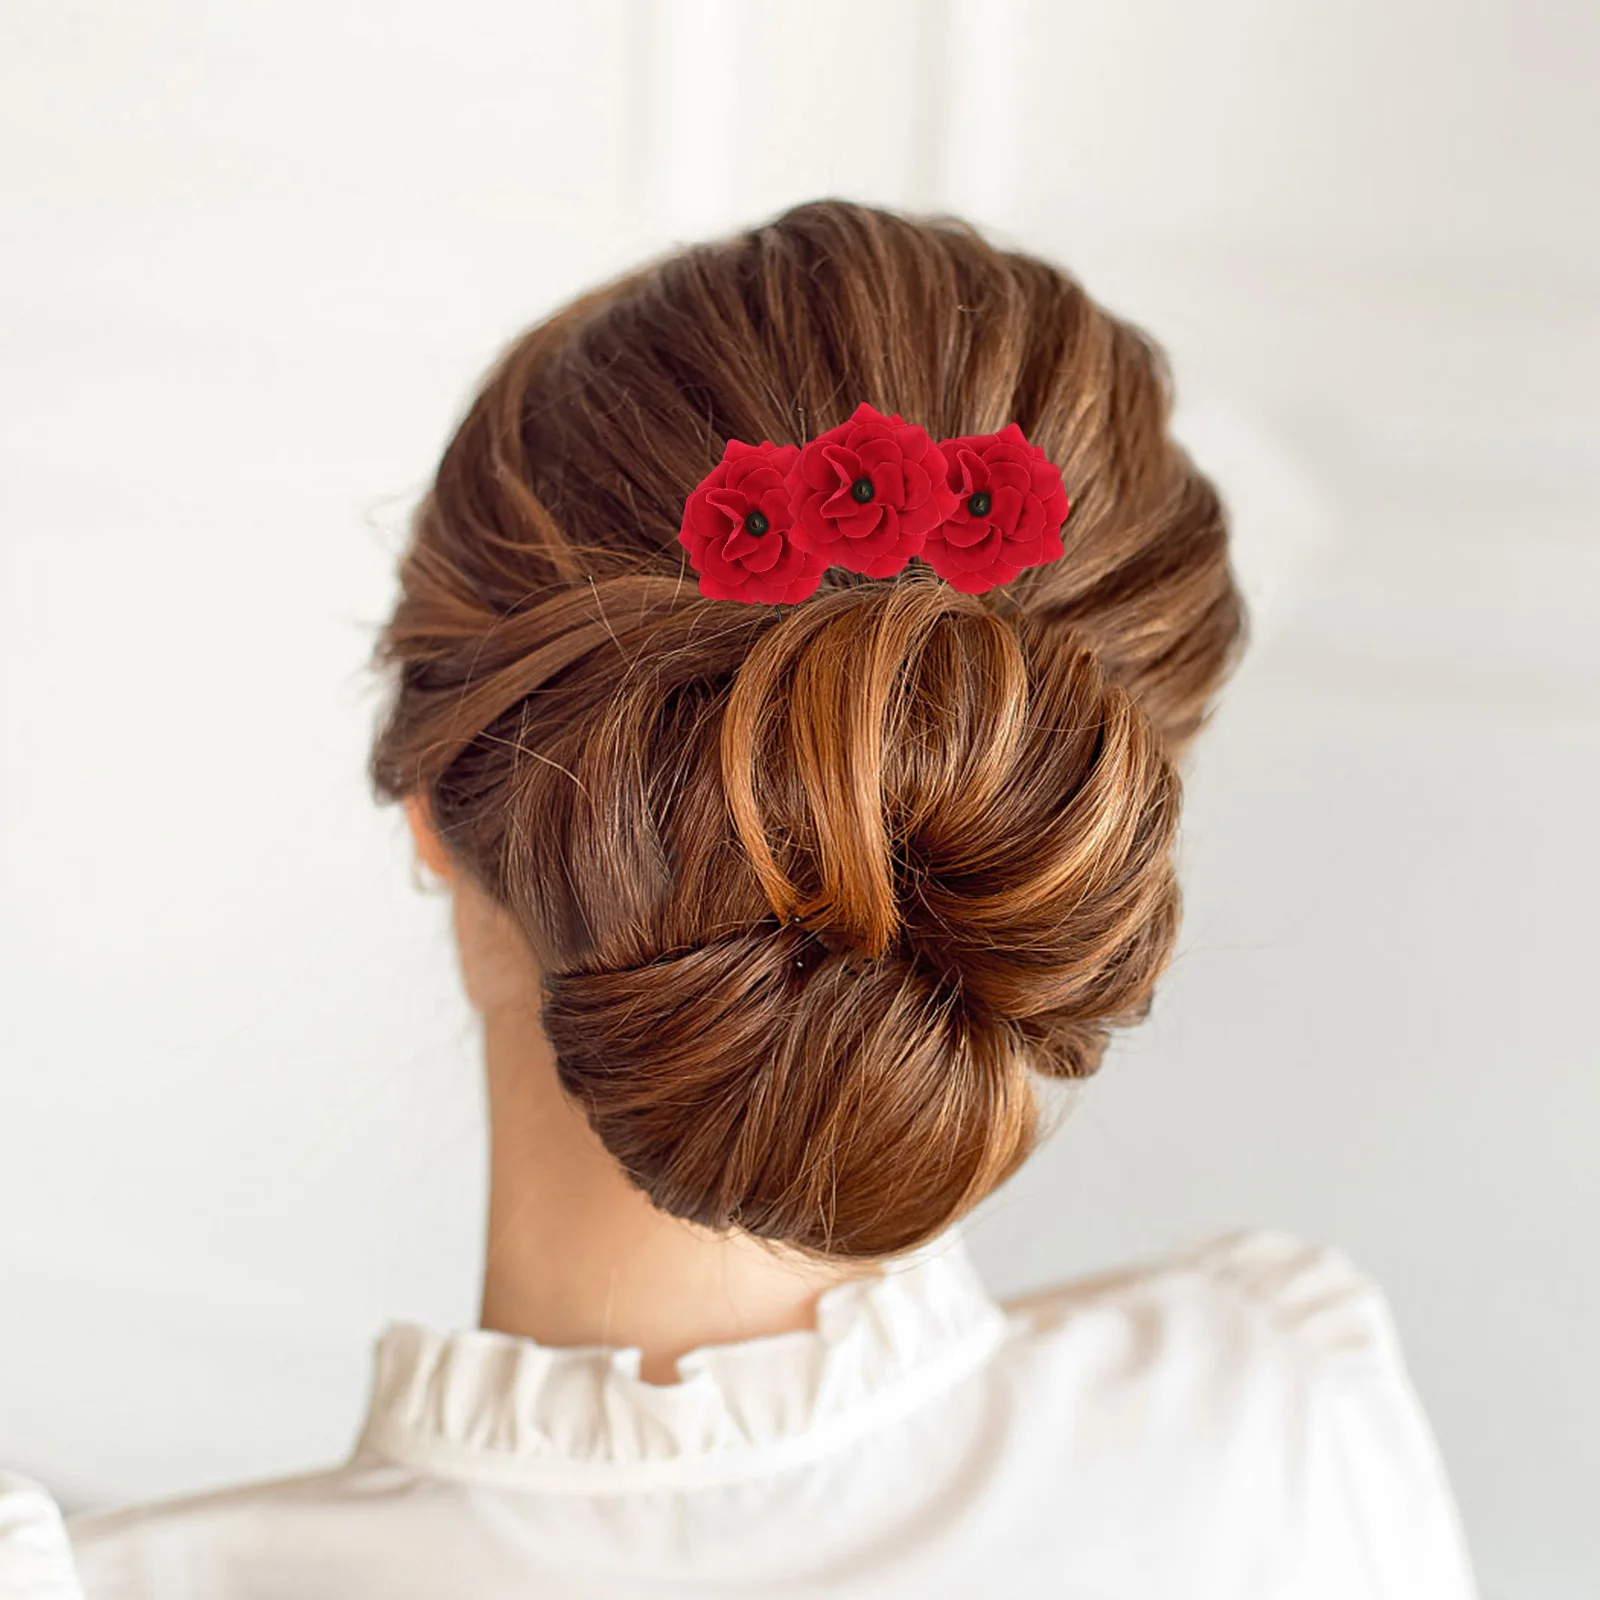 

6pcs/5pcs Rose Flower U-shaped Hair Pins Wedding Hair Accessories Flowers Bridal Hair Clips for Women Headpieces